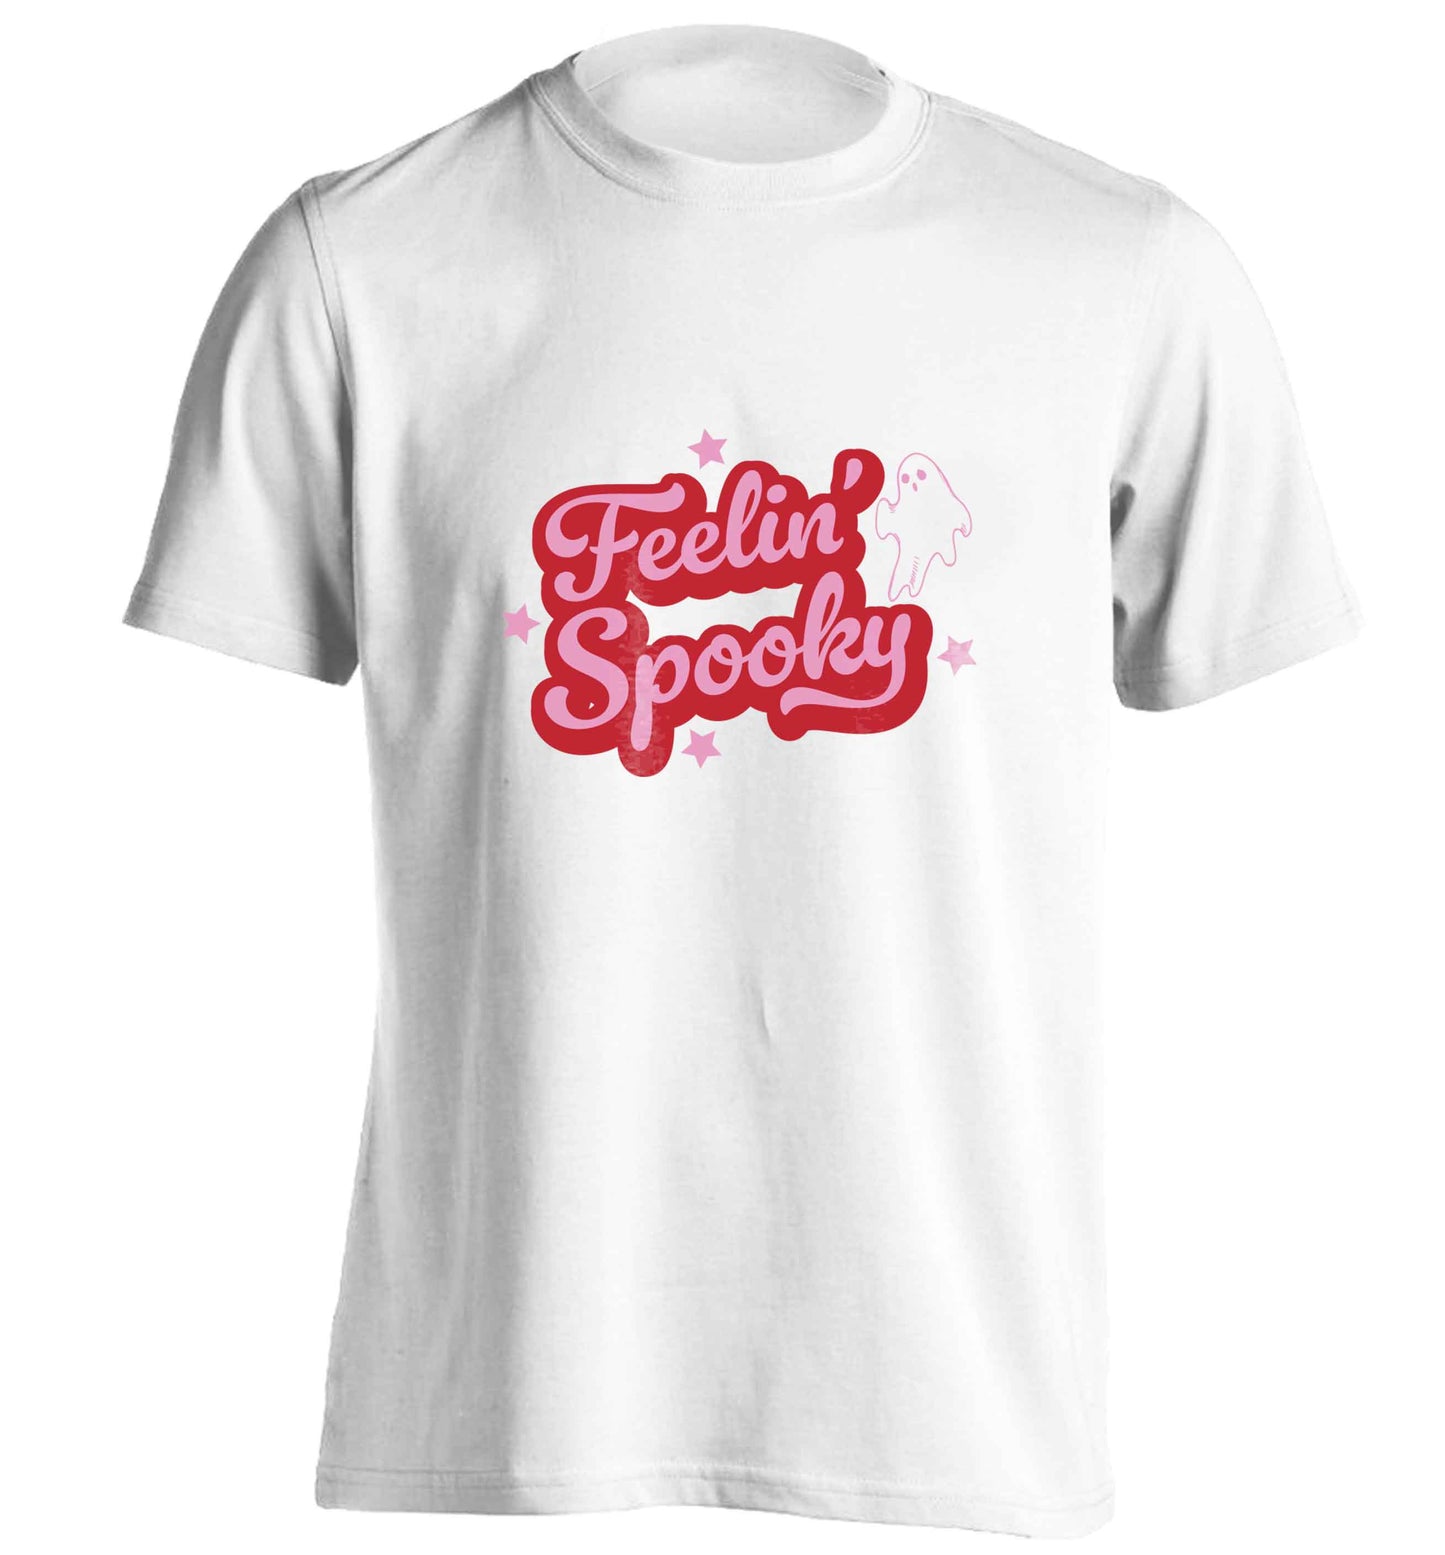 Feelin' Spooky Kit adults unisex white Tshirt 2XL